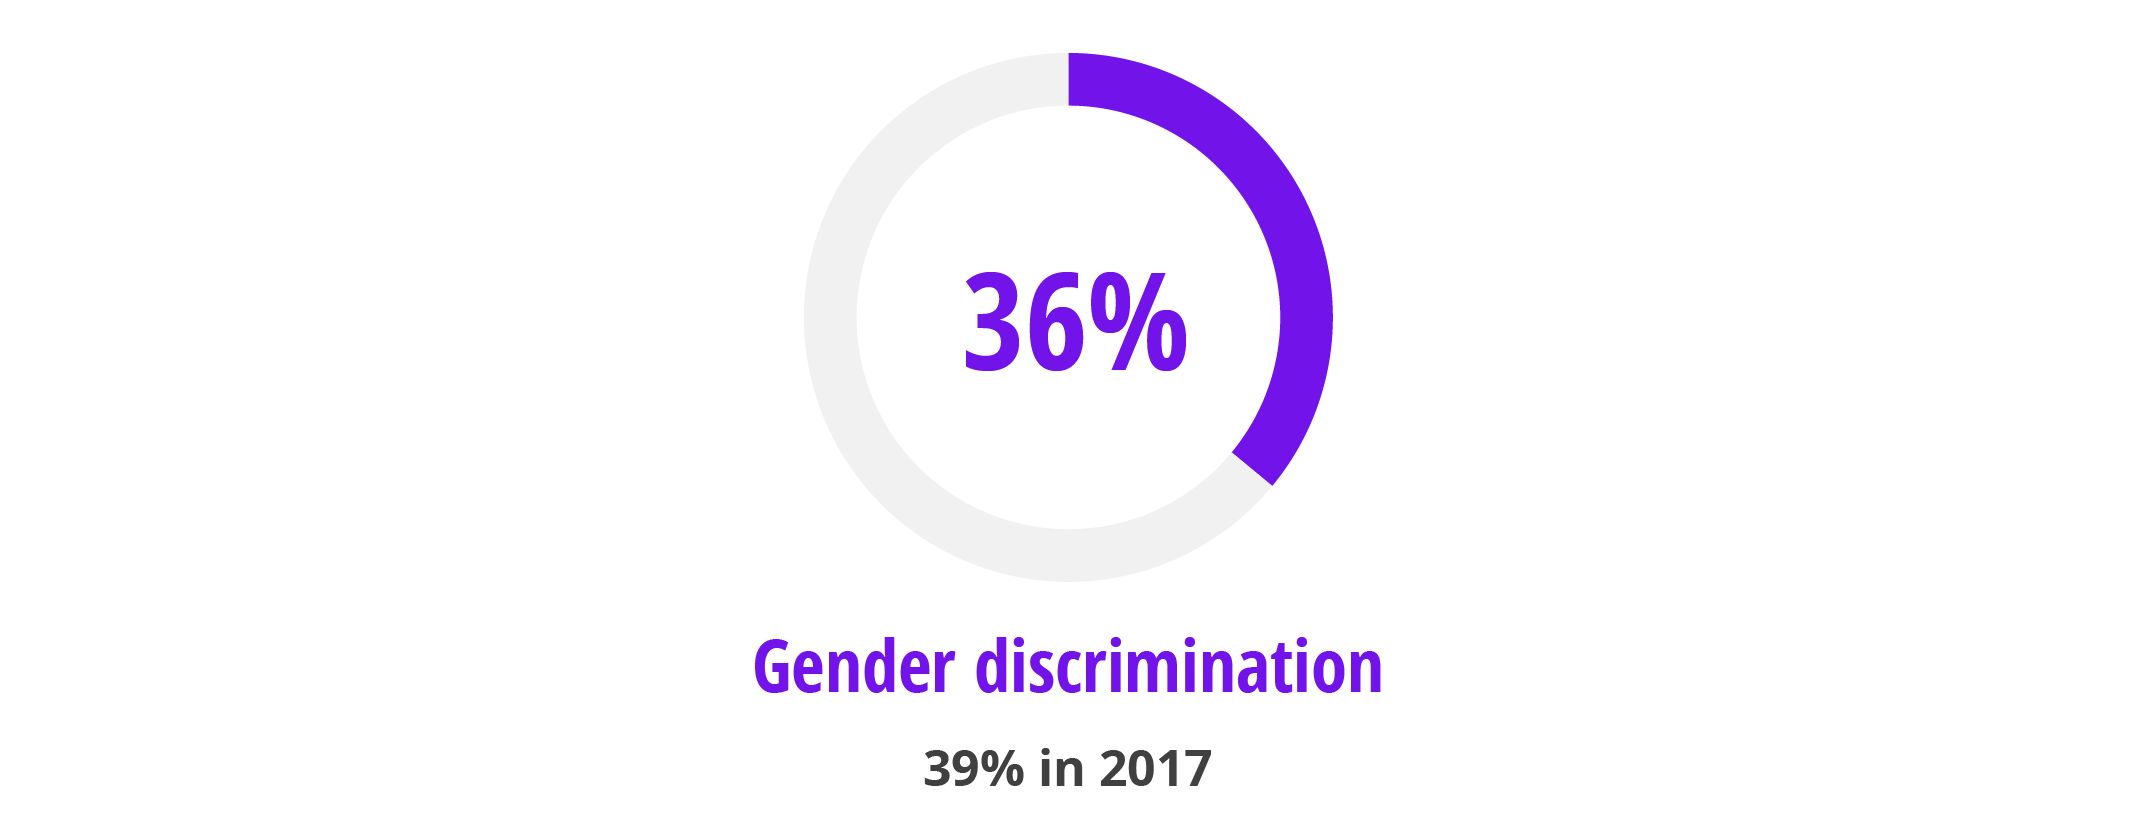 Gender pay gap drivers figure 2 discrimination